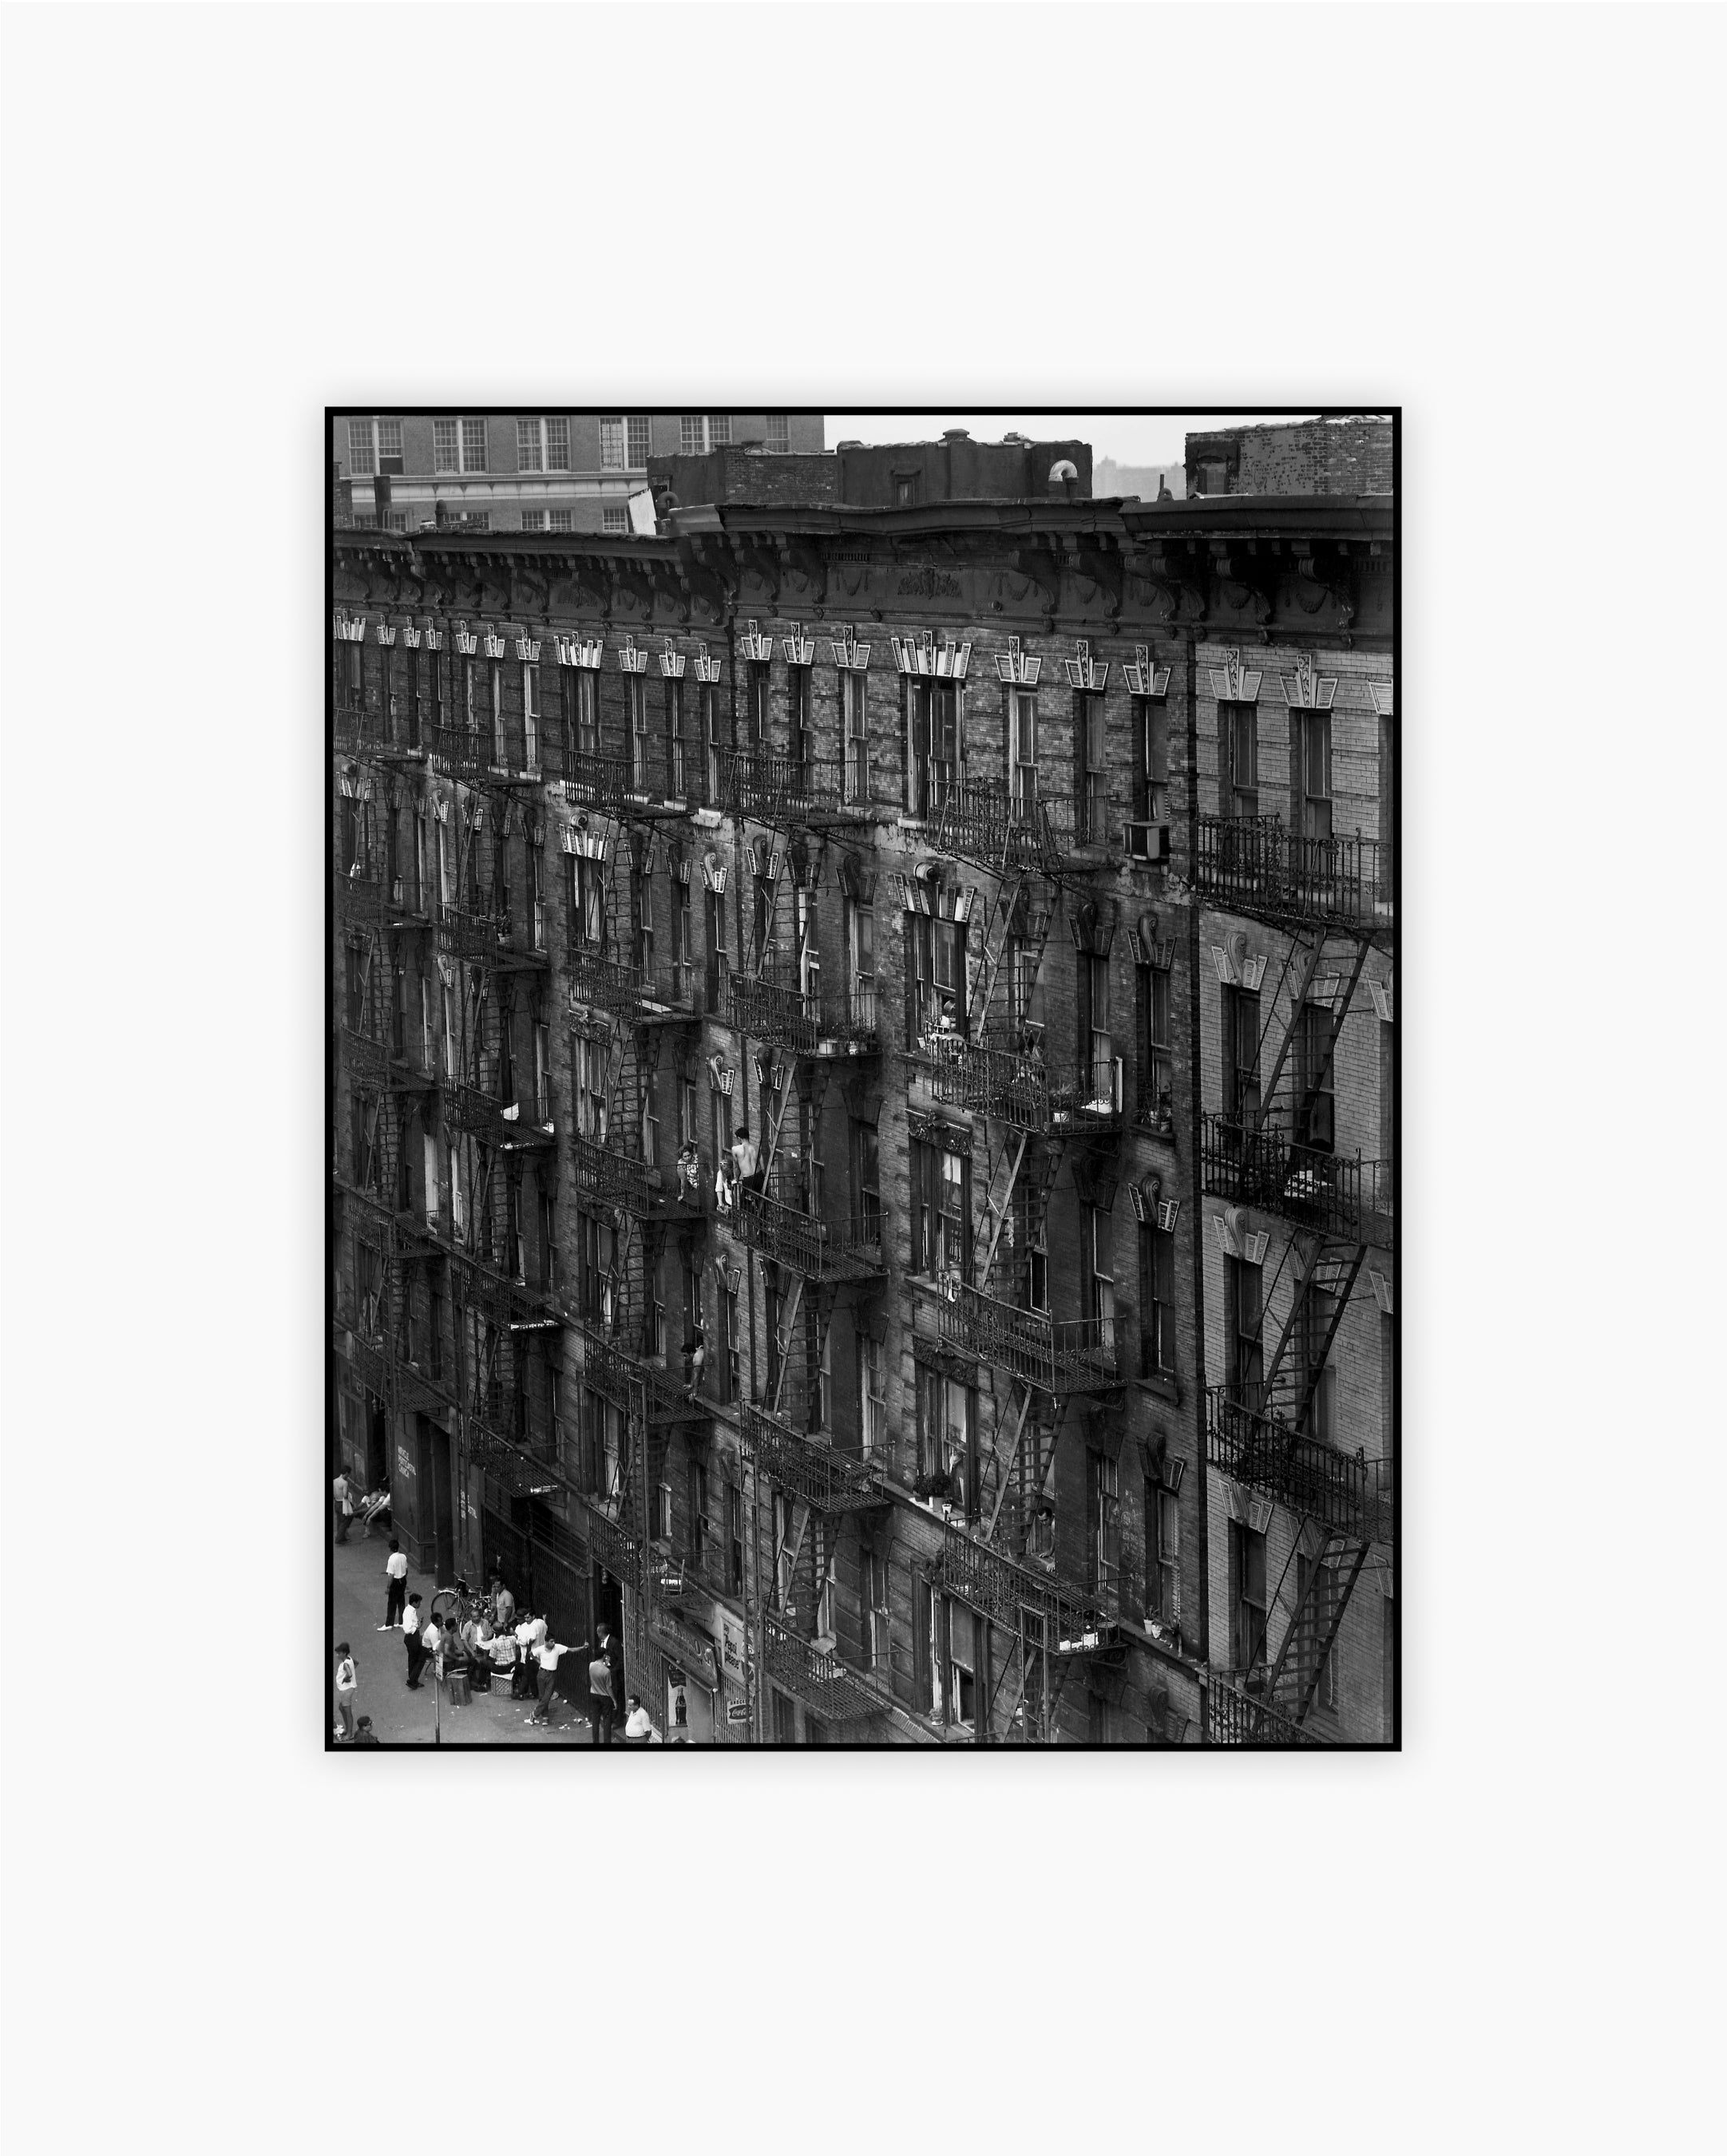 East 100th Street, Harlem, New York City, USA, 1966